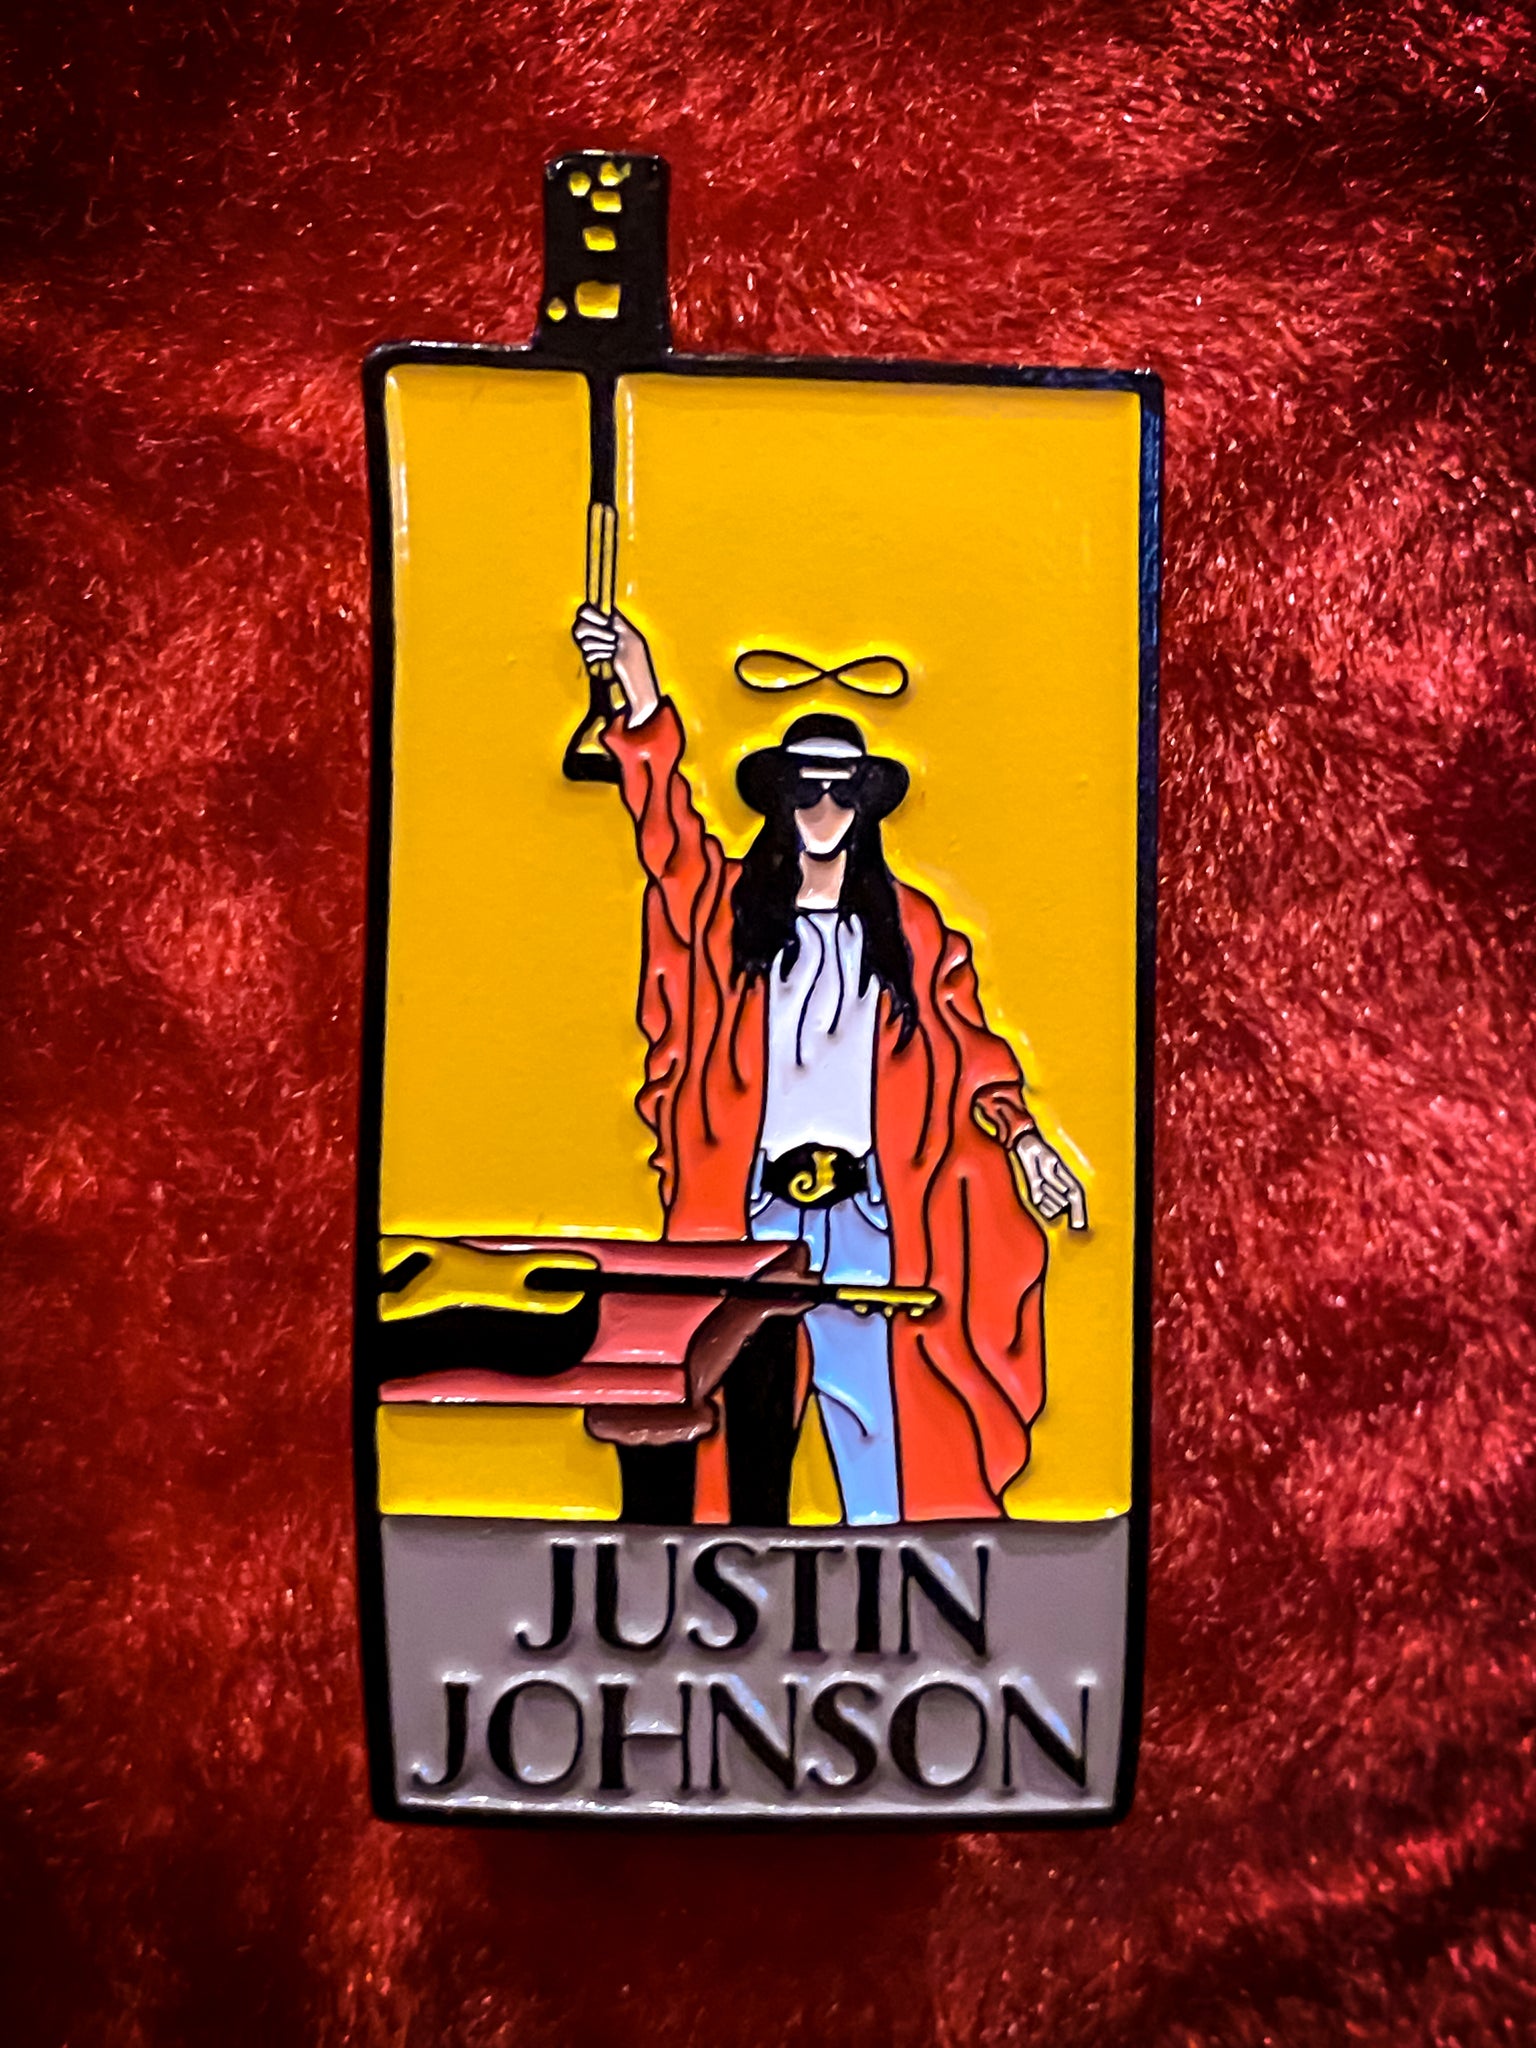 Justin Johnson "Magician" Lapel Pin